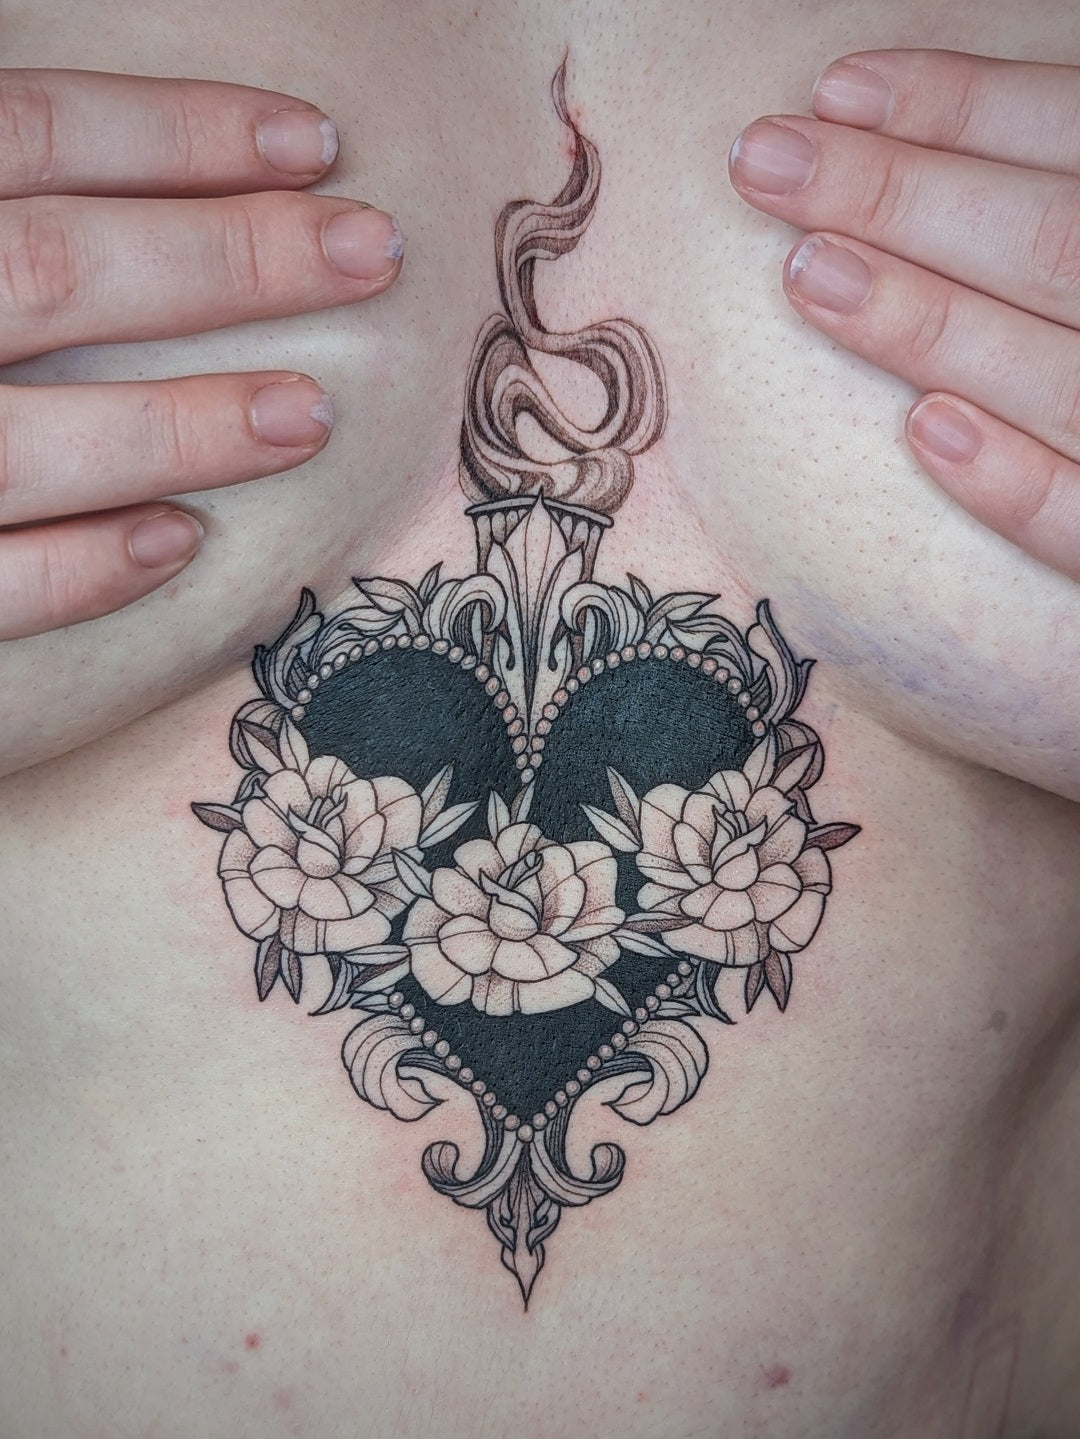 Fine line flower tattoo on the side boob.